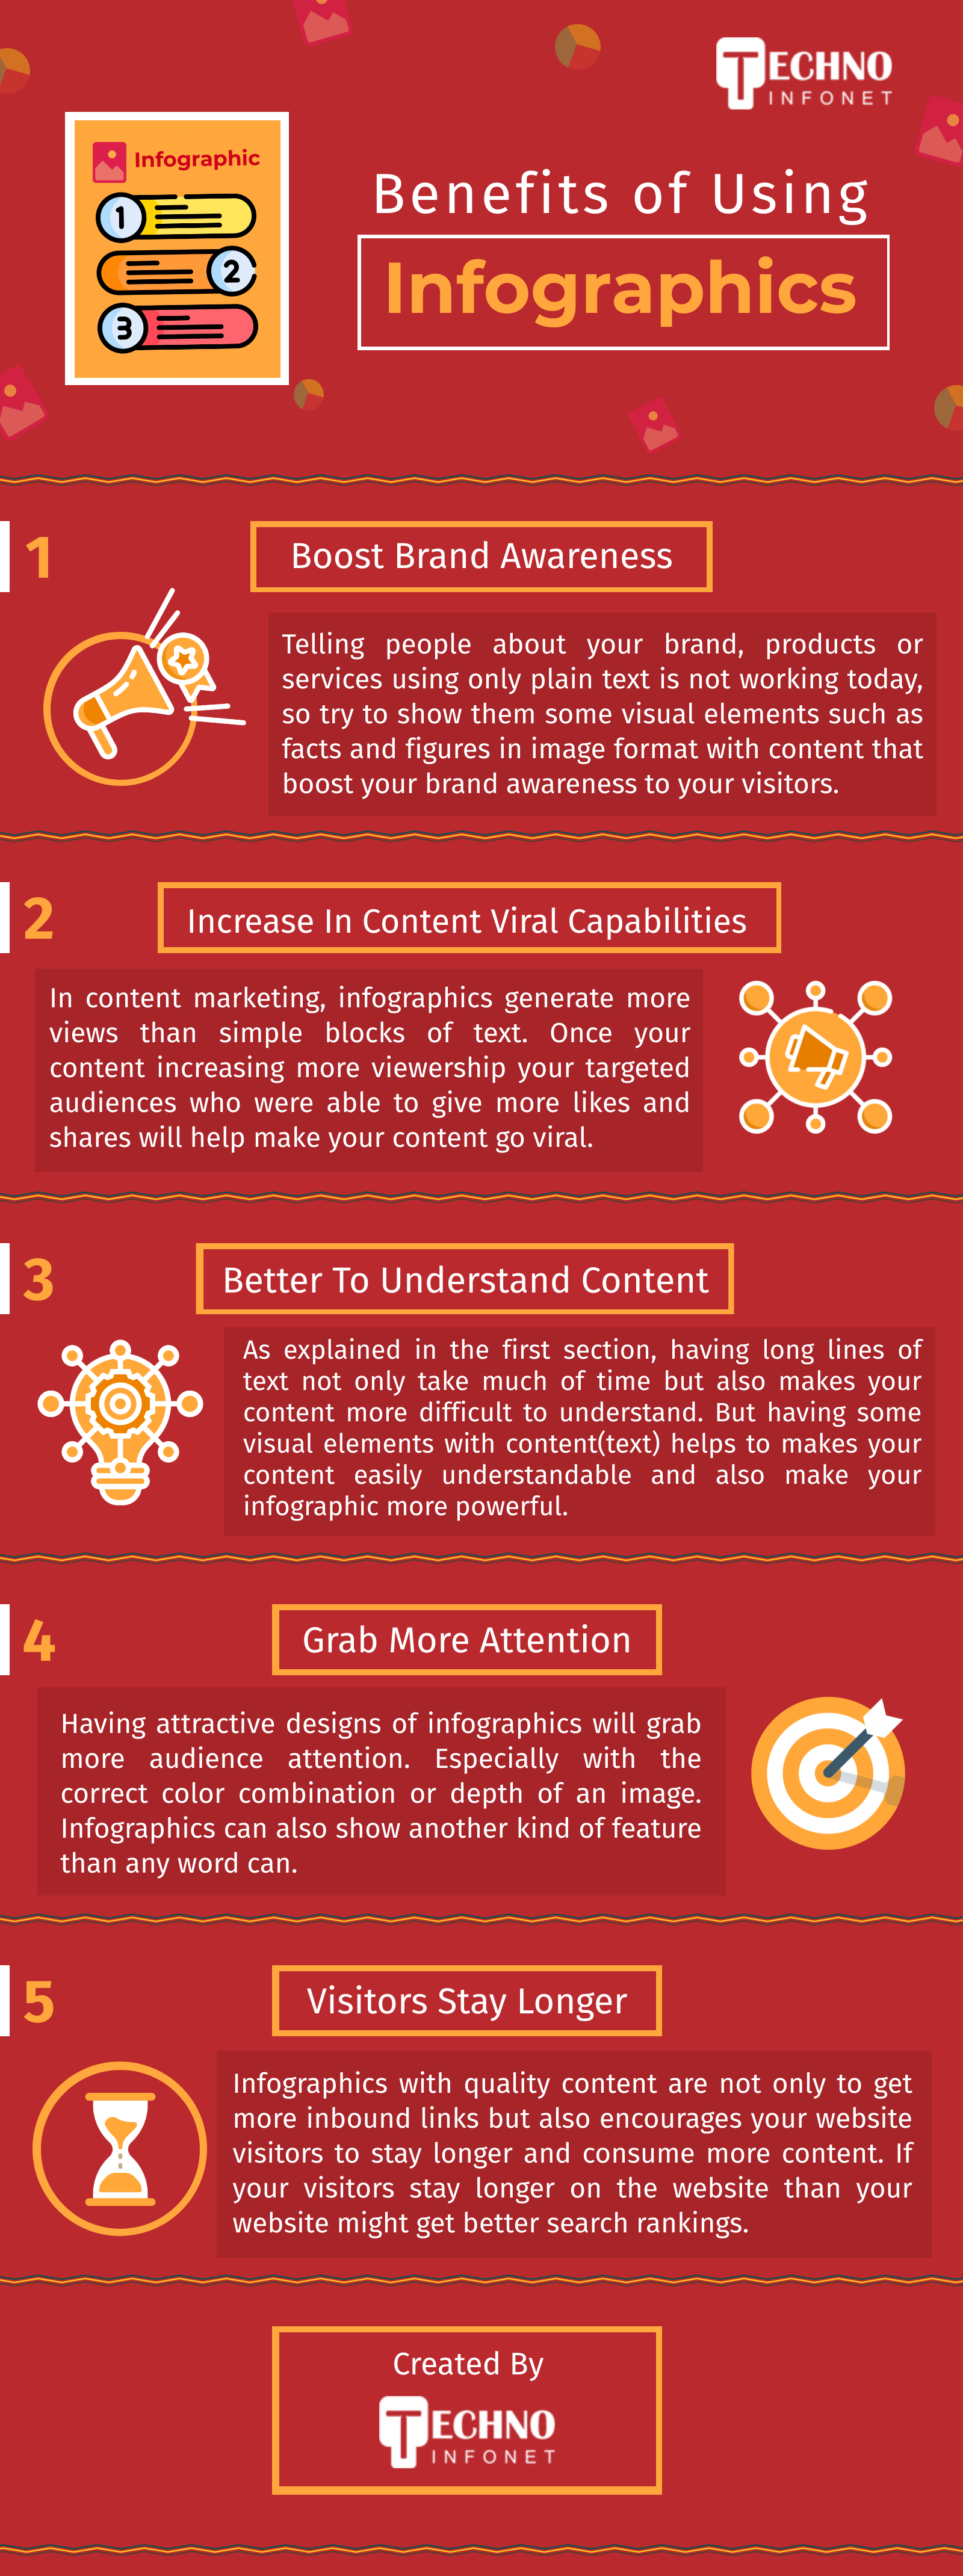 Benefits of Using Infographics